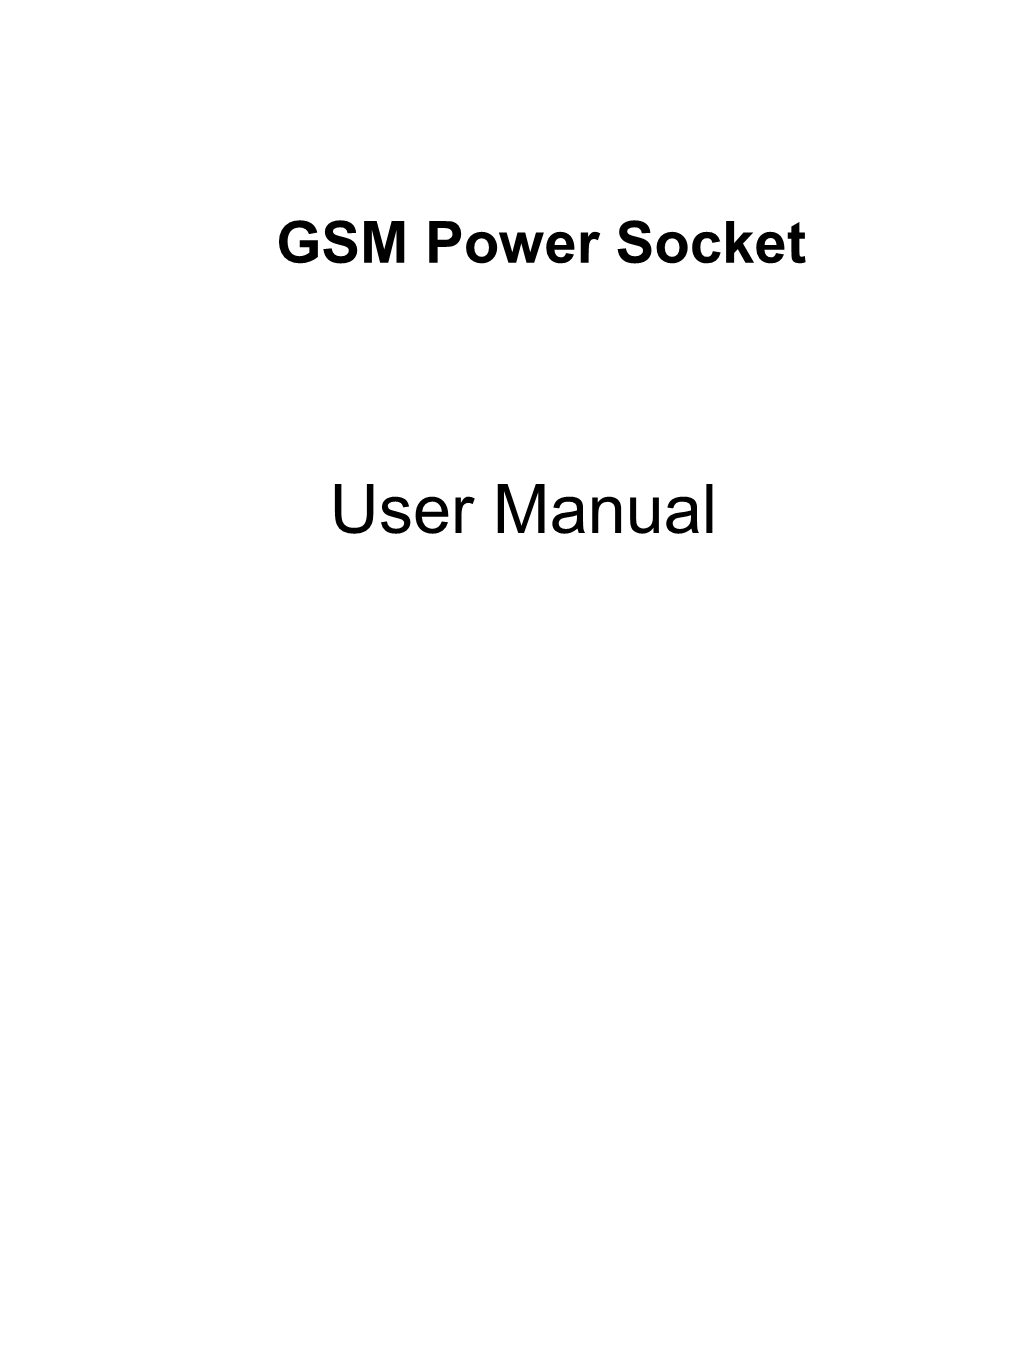 Gsm Power Socket User Manual